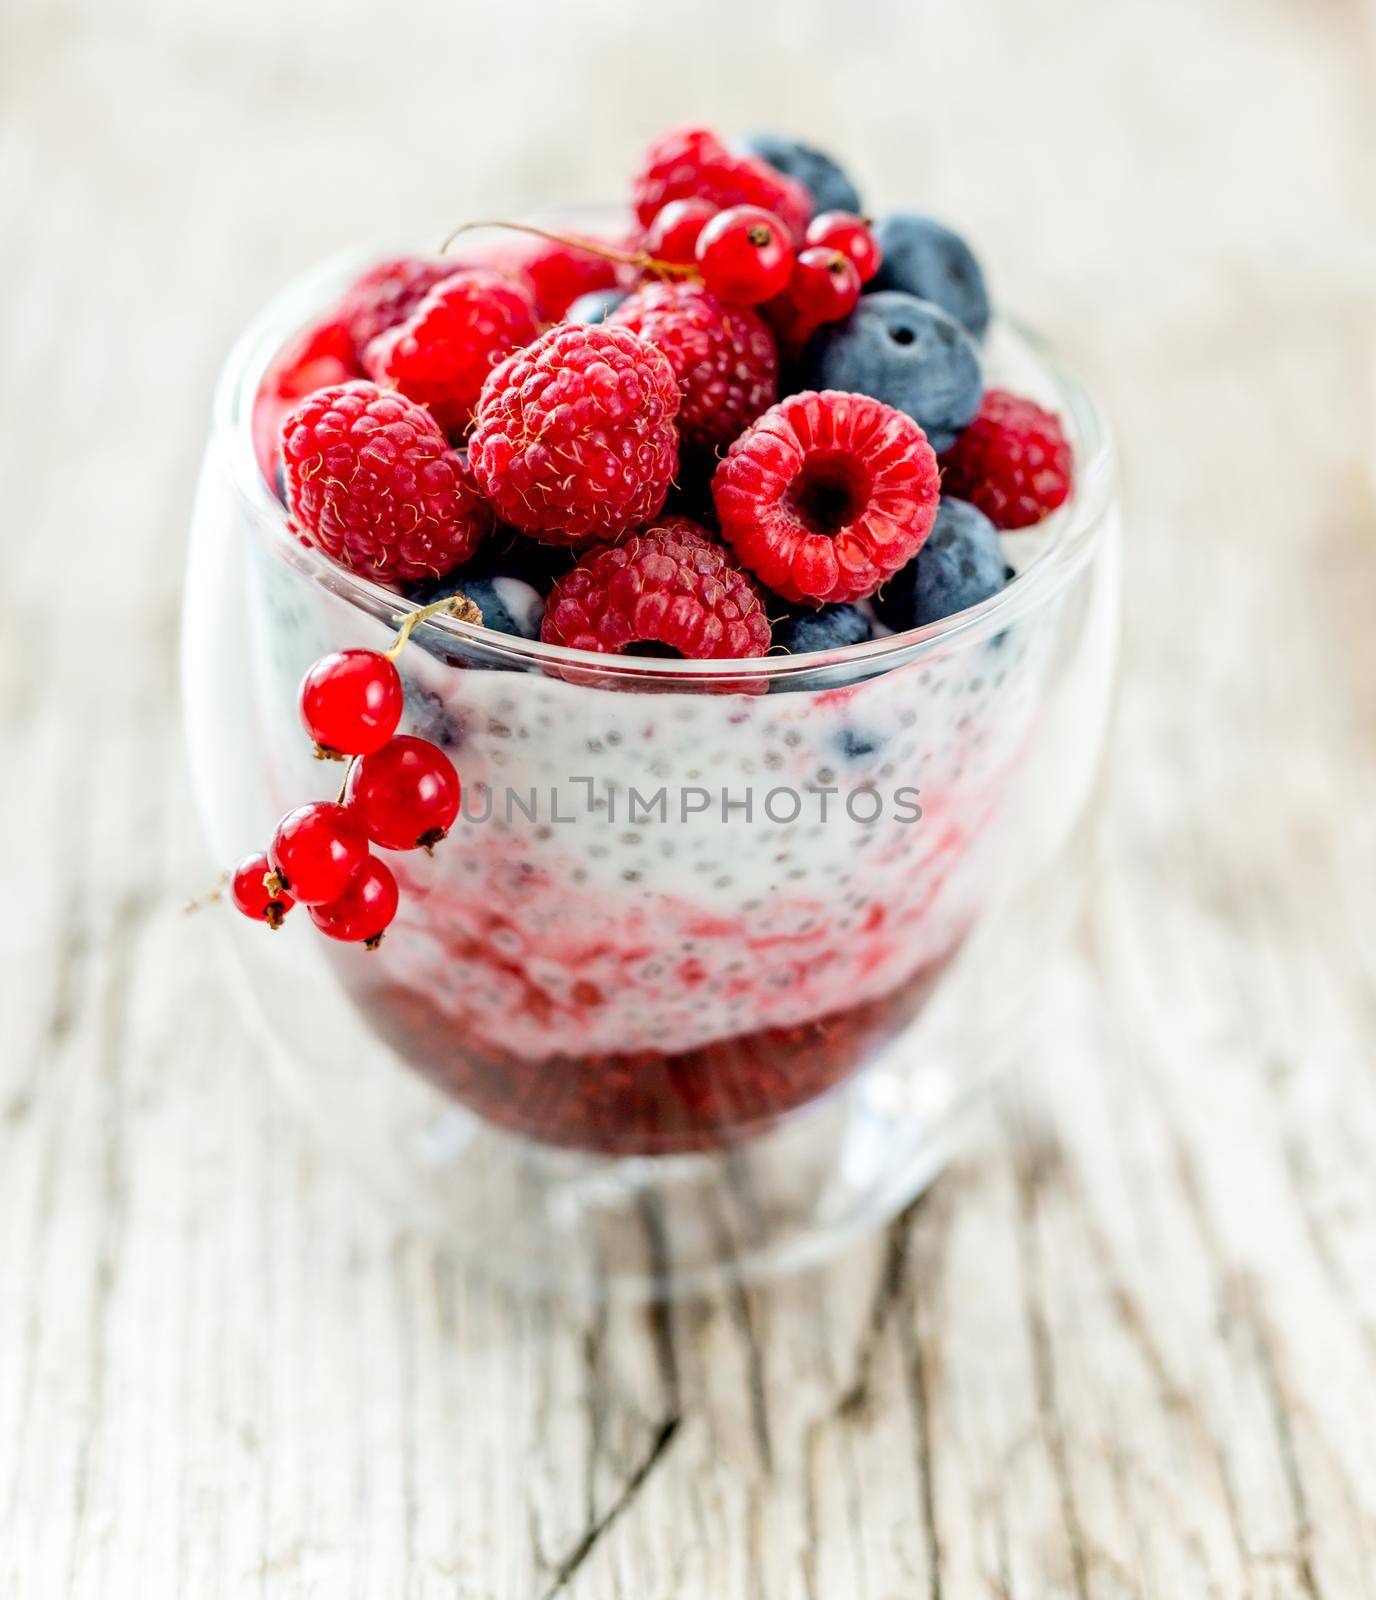 Dessert from yogurt with chia seeds, raspberries and blueberries by tan4ikk1